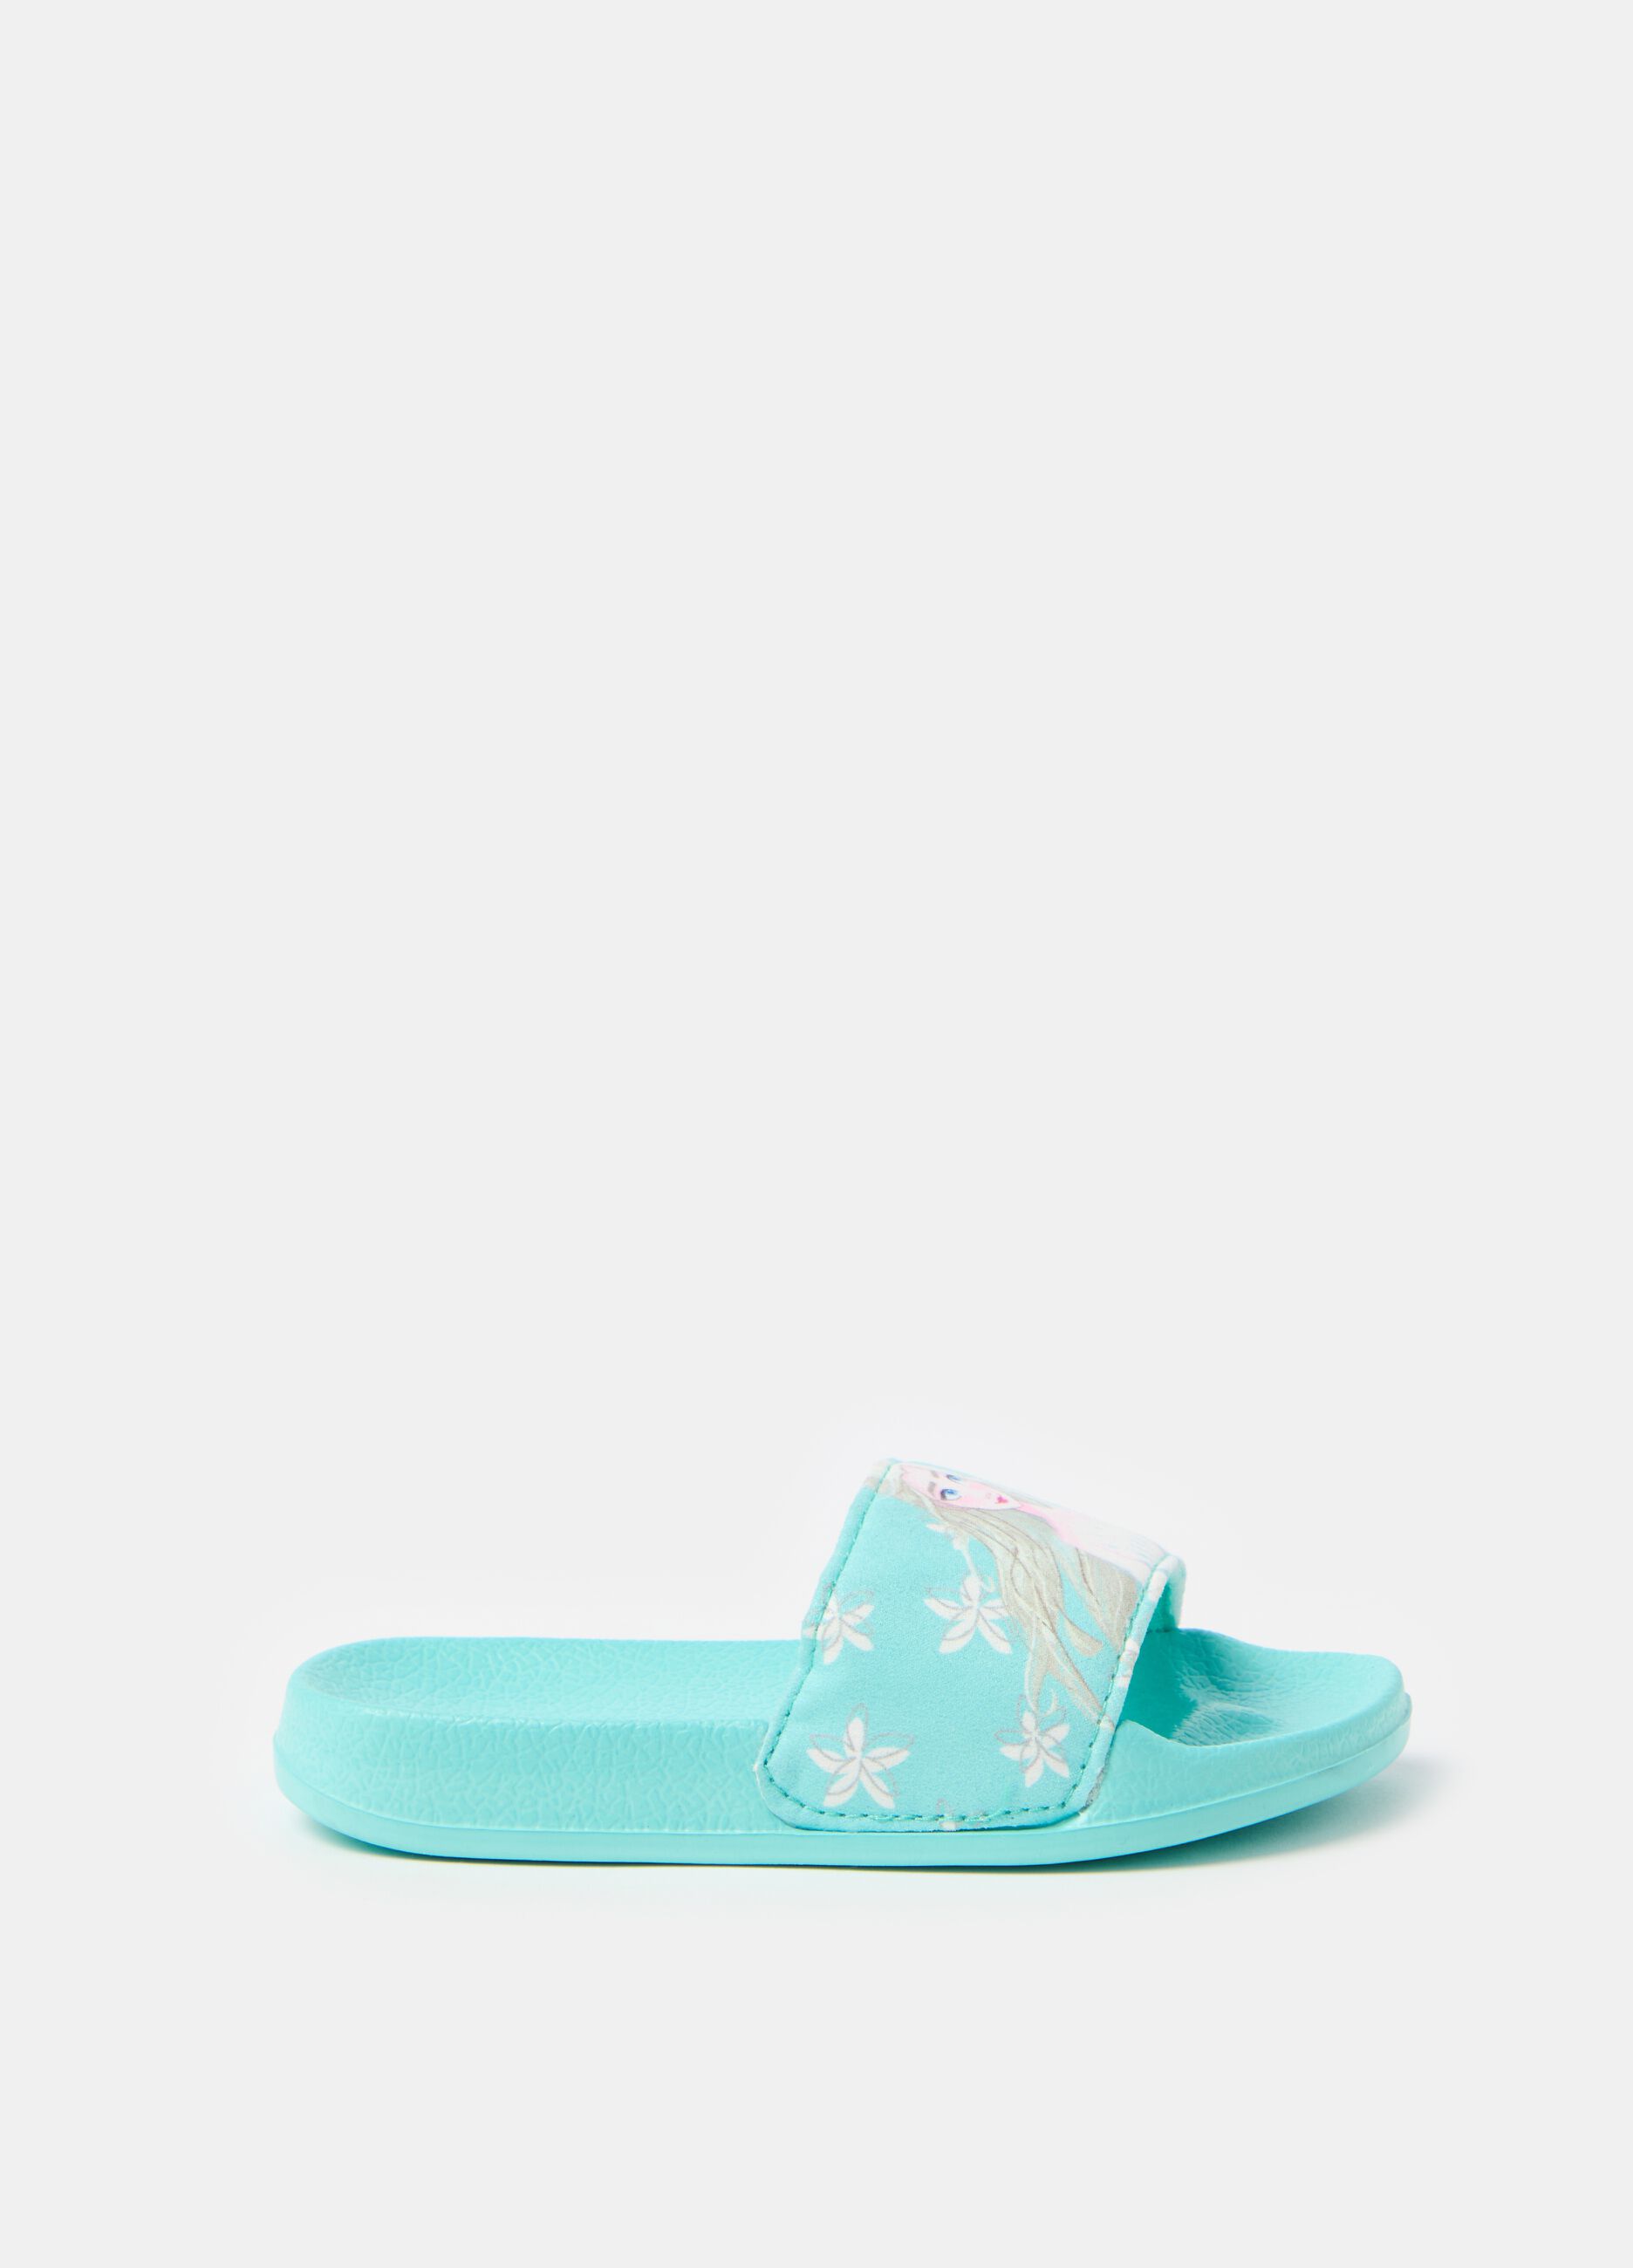 Frozen Elsa slippers